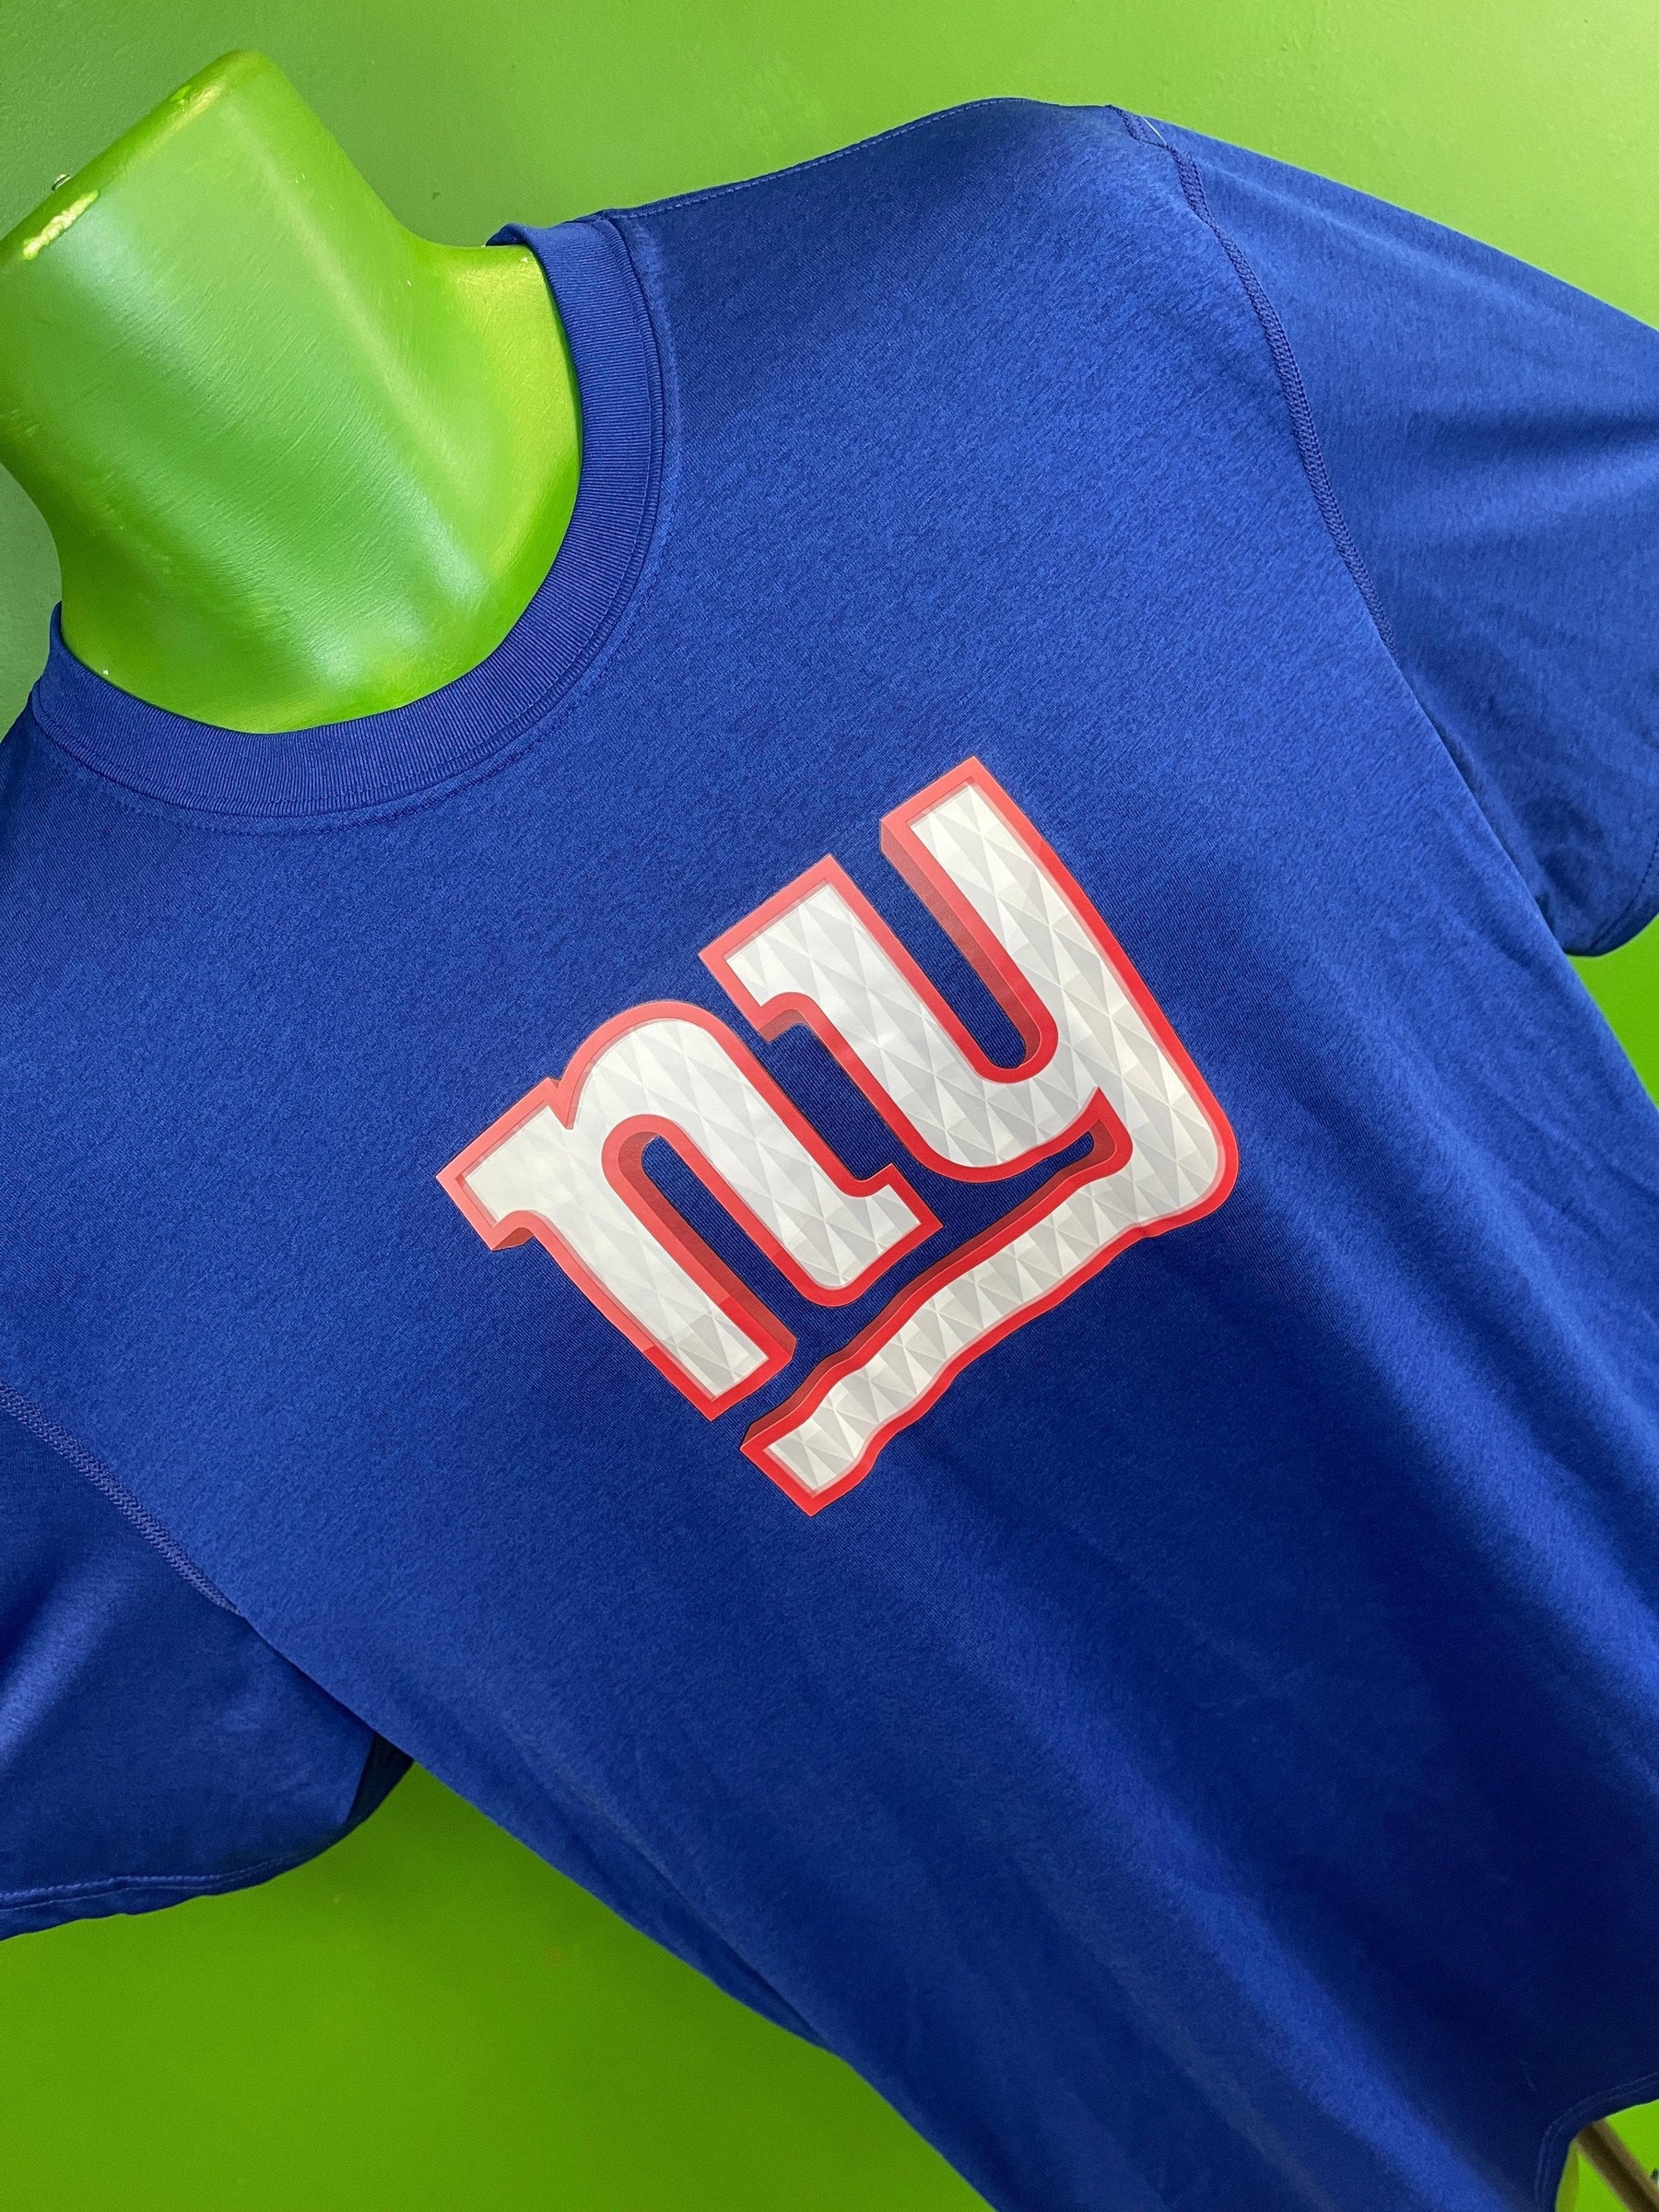 NFL New York Giants Crucial Catch T-Shirt Men's Large